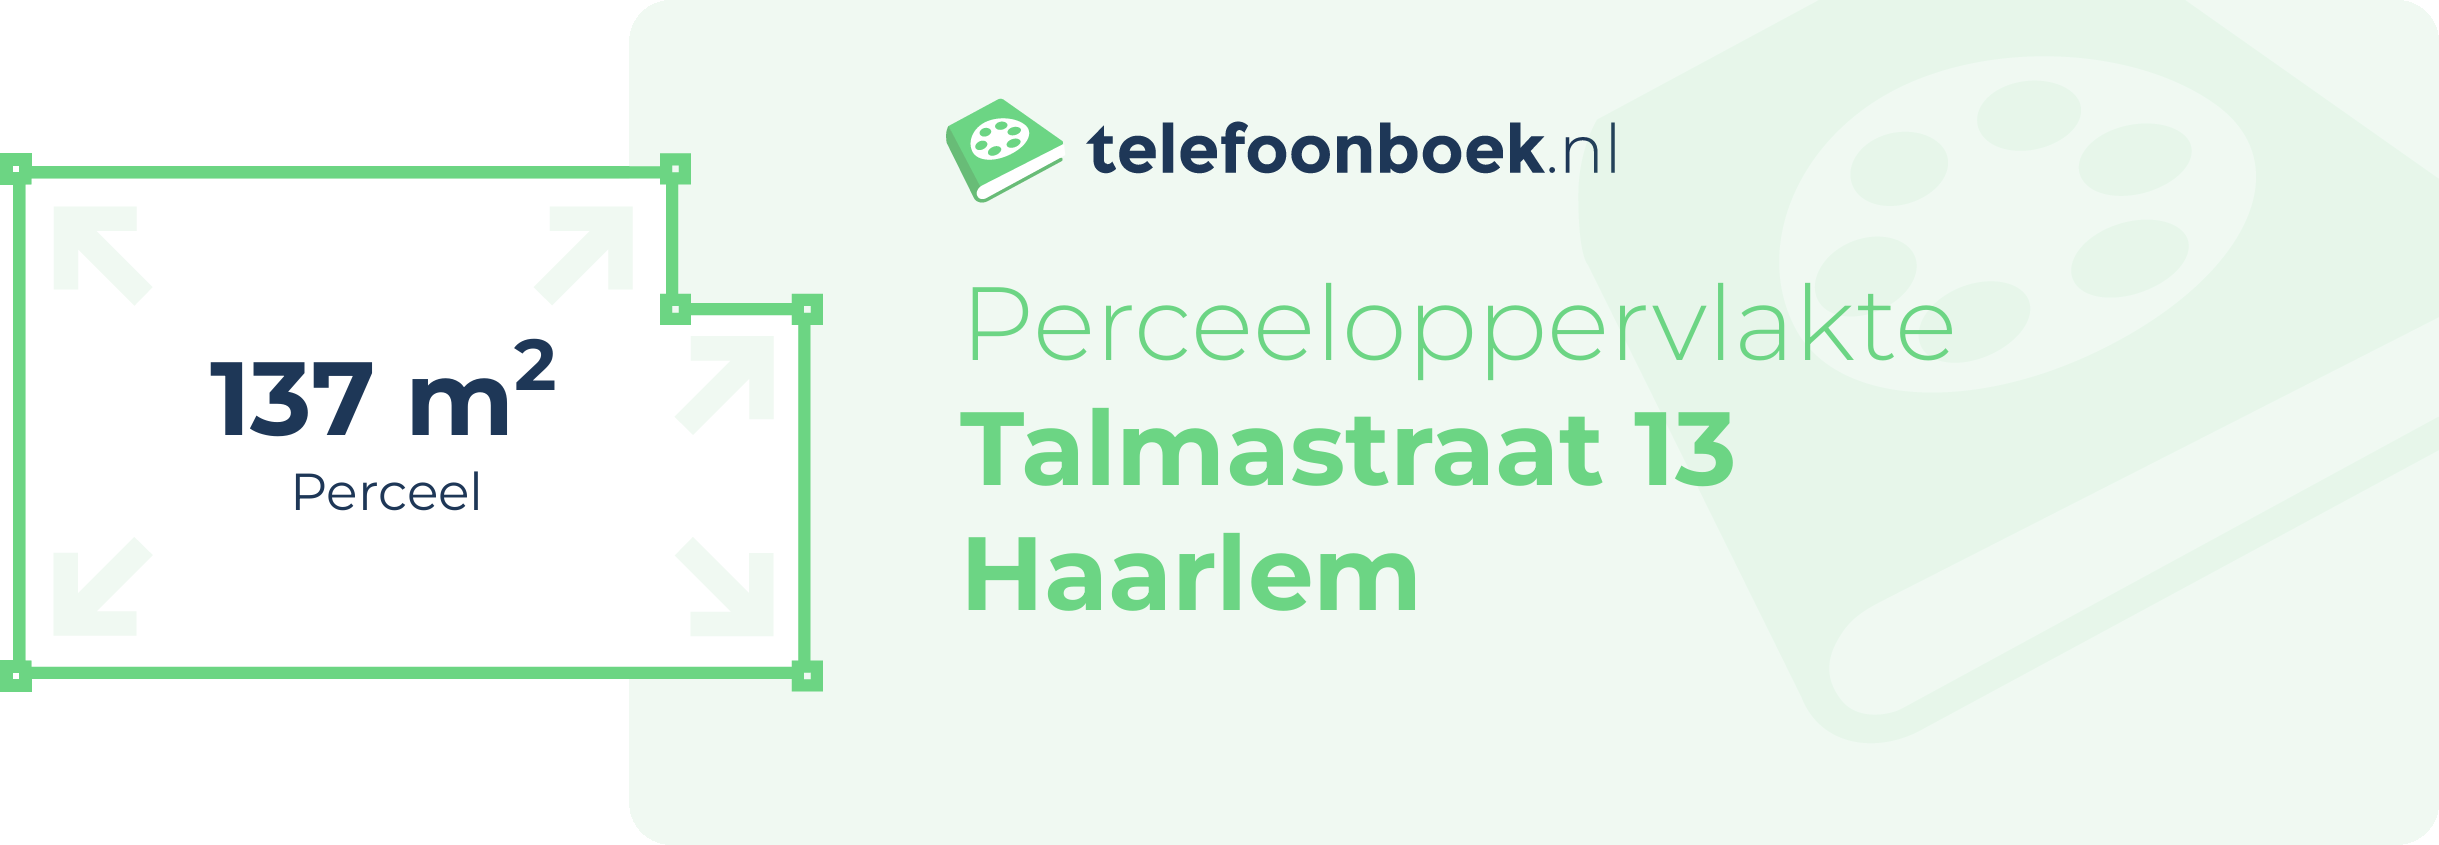 Perceeloppervlakte Talmastraat 13 Haarlem